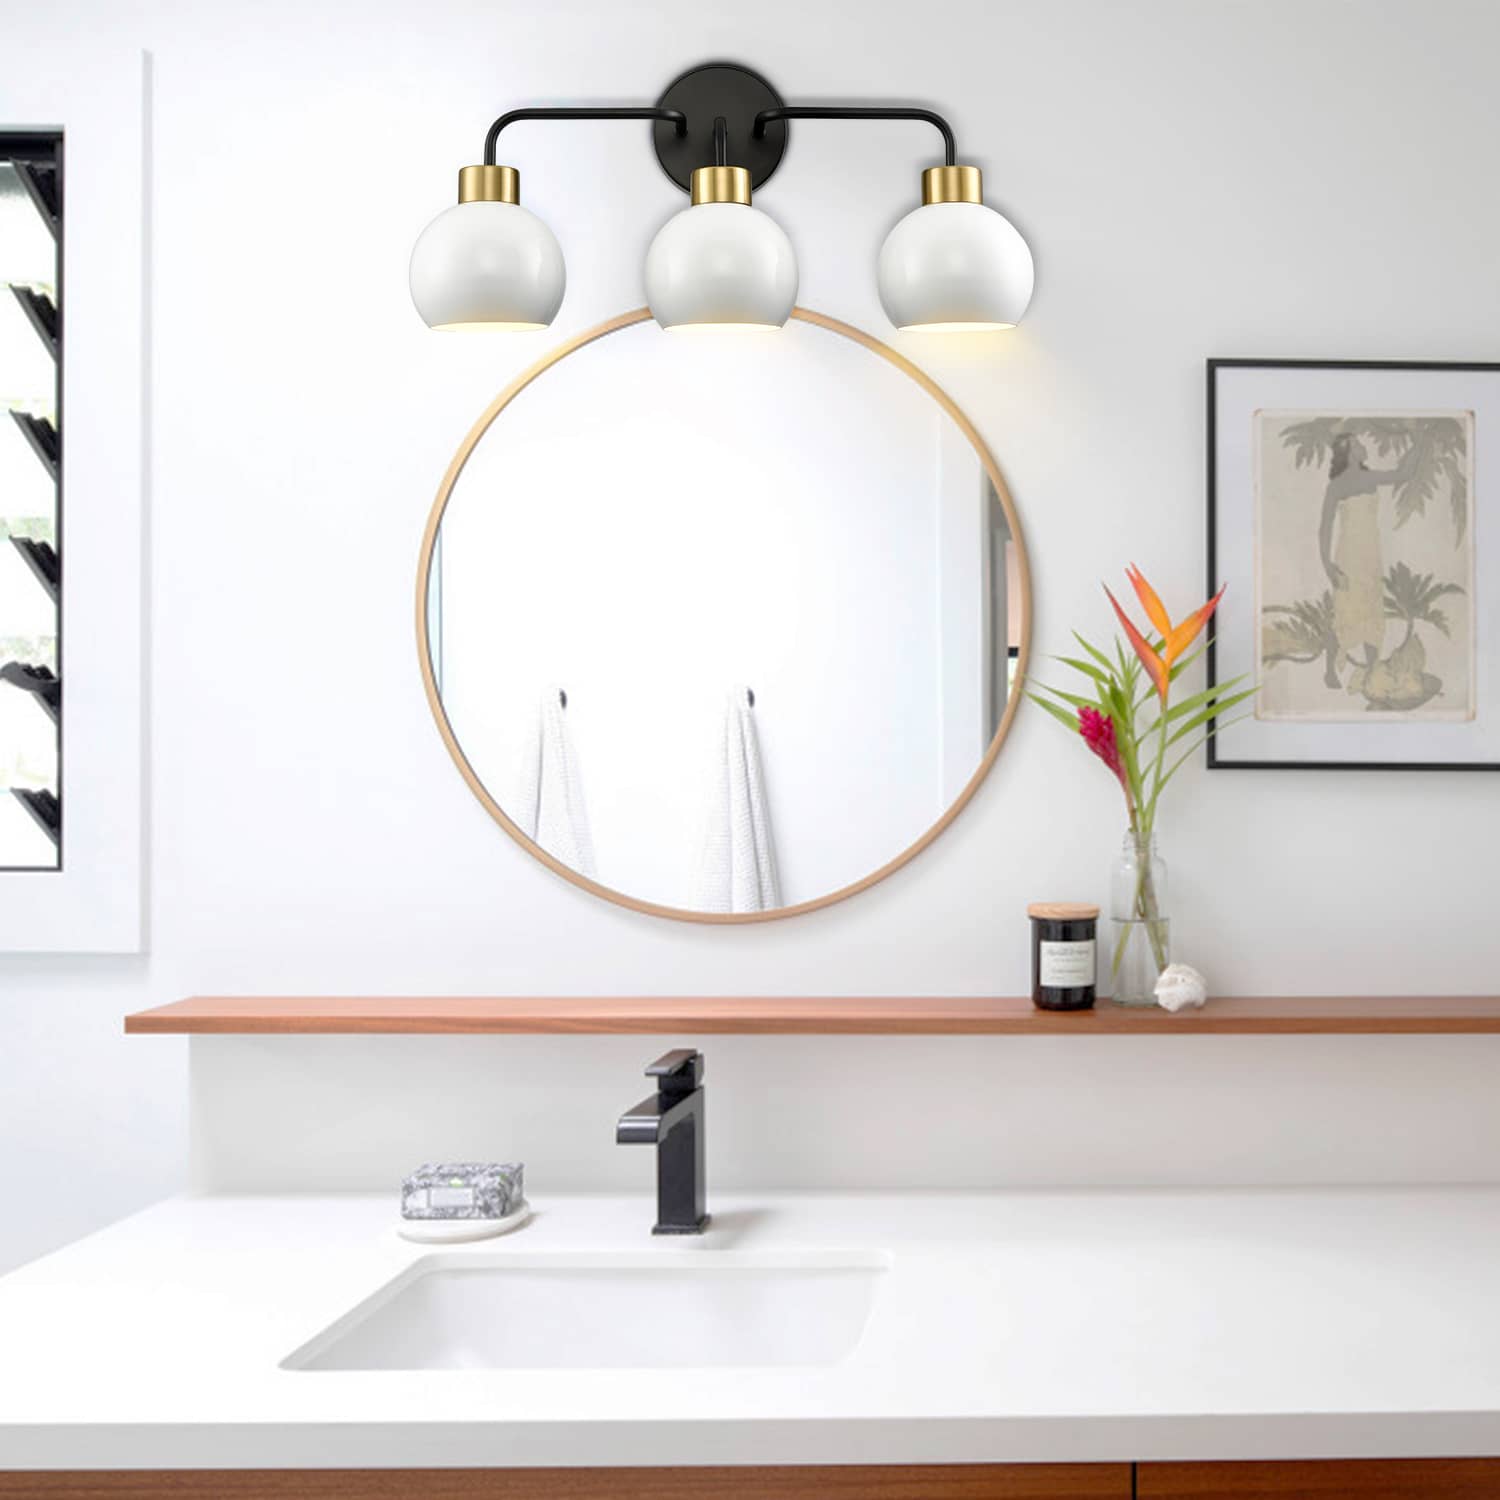 White Vanity Light Fixture Bathroom 3-Light Wall Light with White Metal Shade Over Mirror Lighting